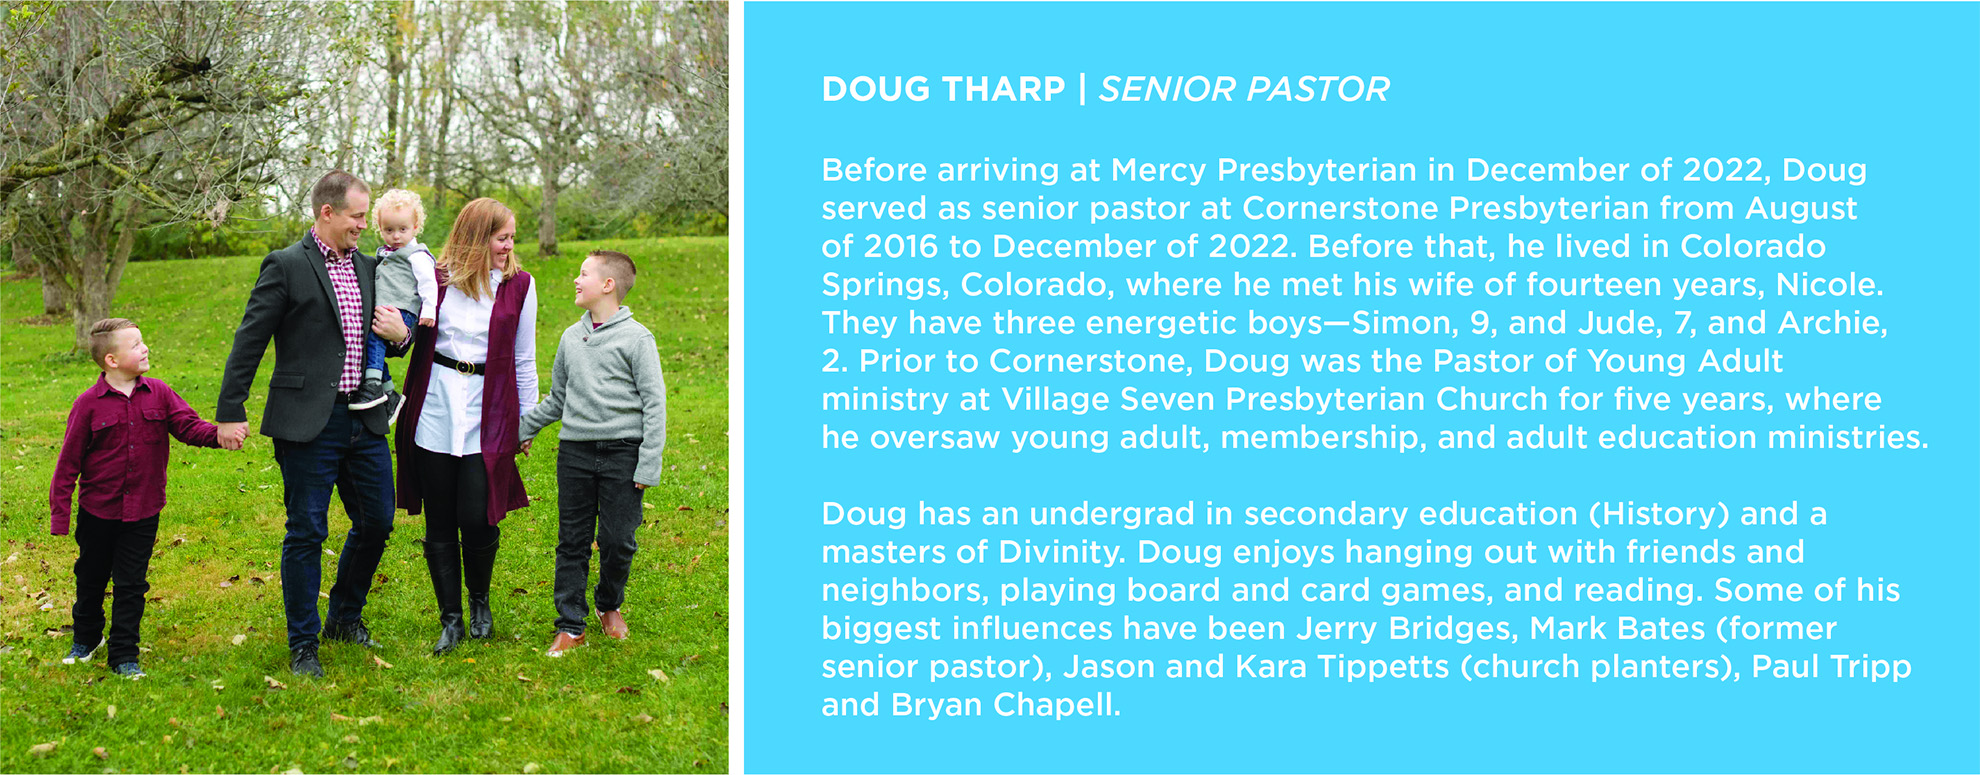 Rev. Doug Tharp info